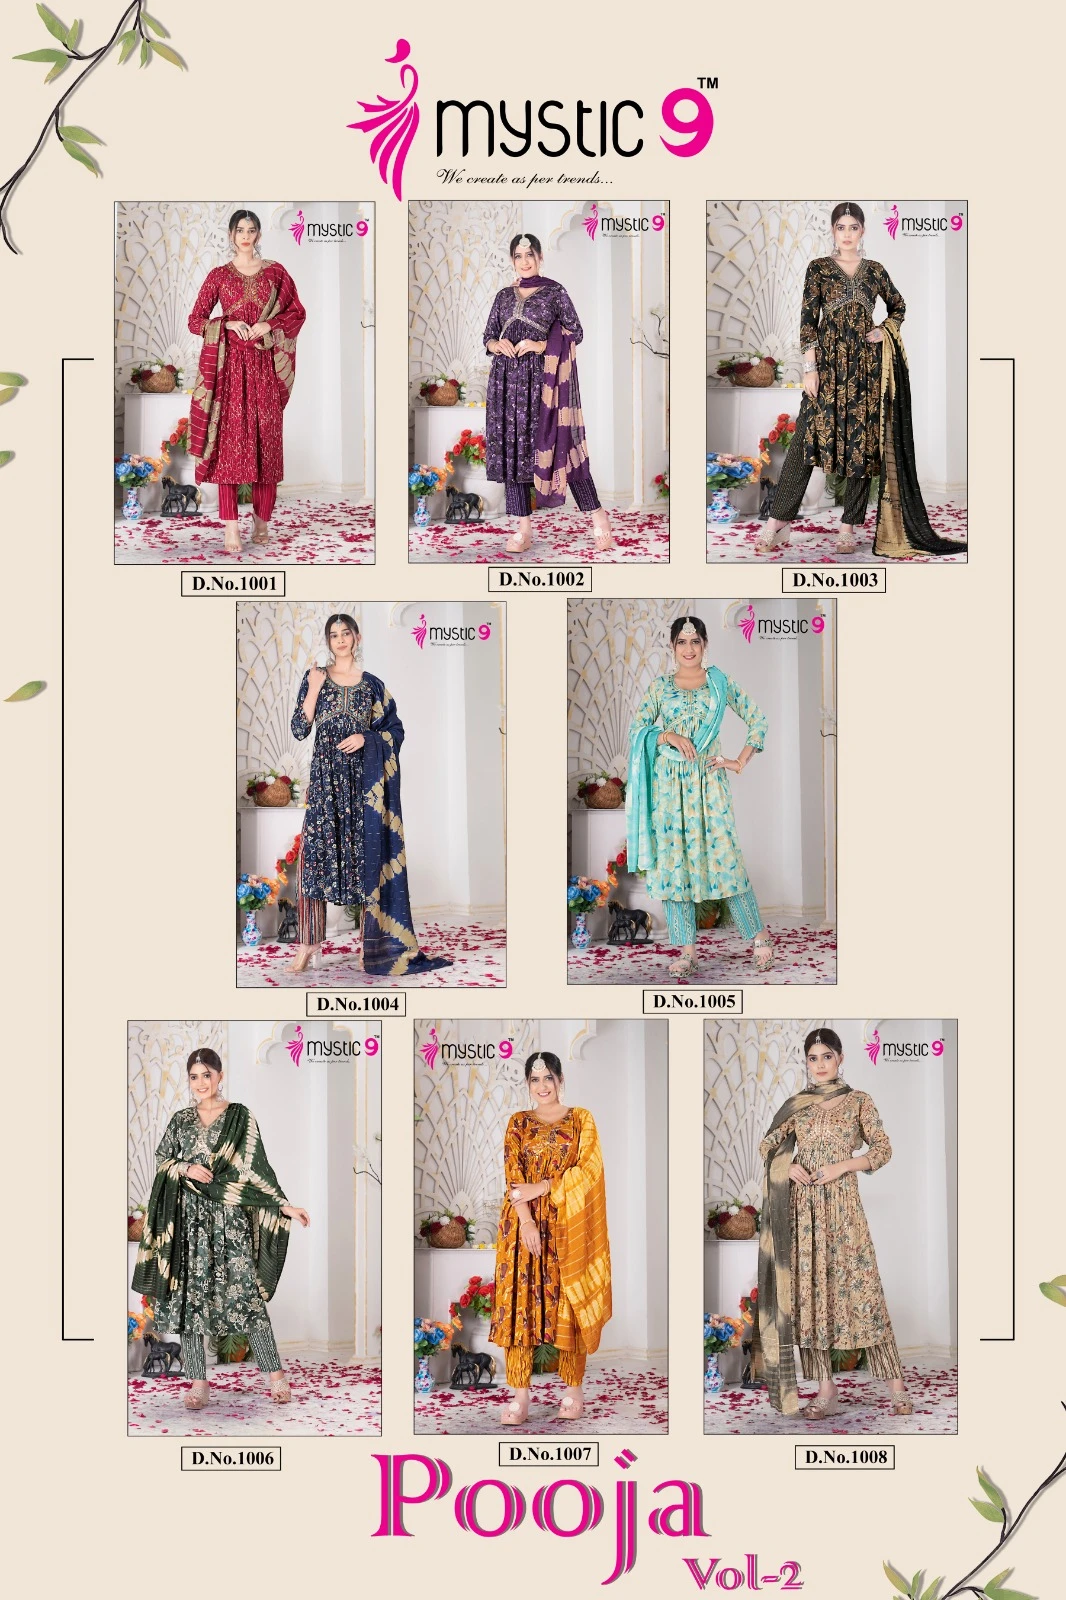 Mystic 9 Pooja Vol 2 collection 9